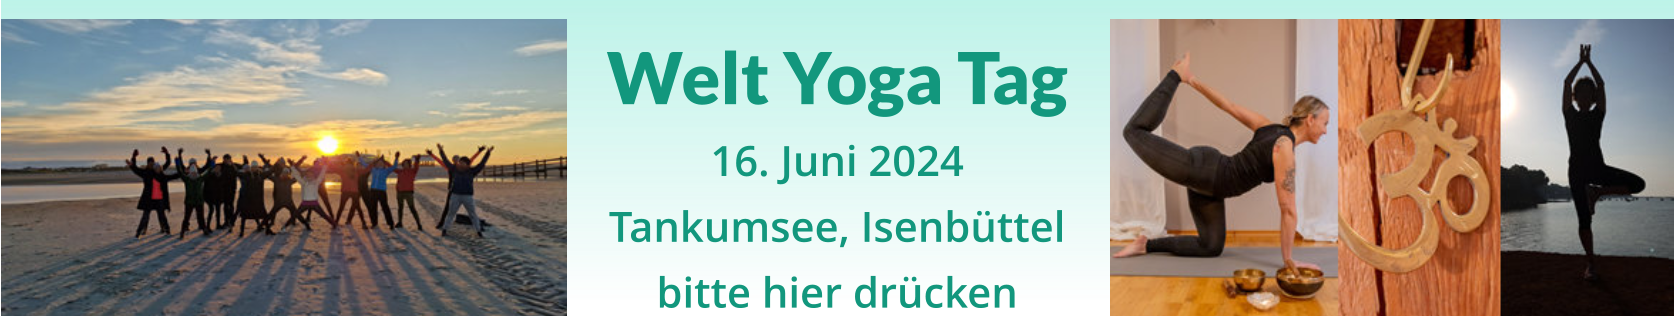 Welt Yoga Tag  16. Juni 2024 Tankumsee, Isenbüttel bitte hier drücken